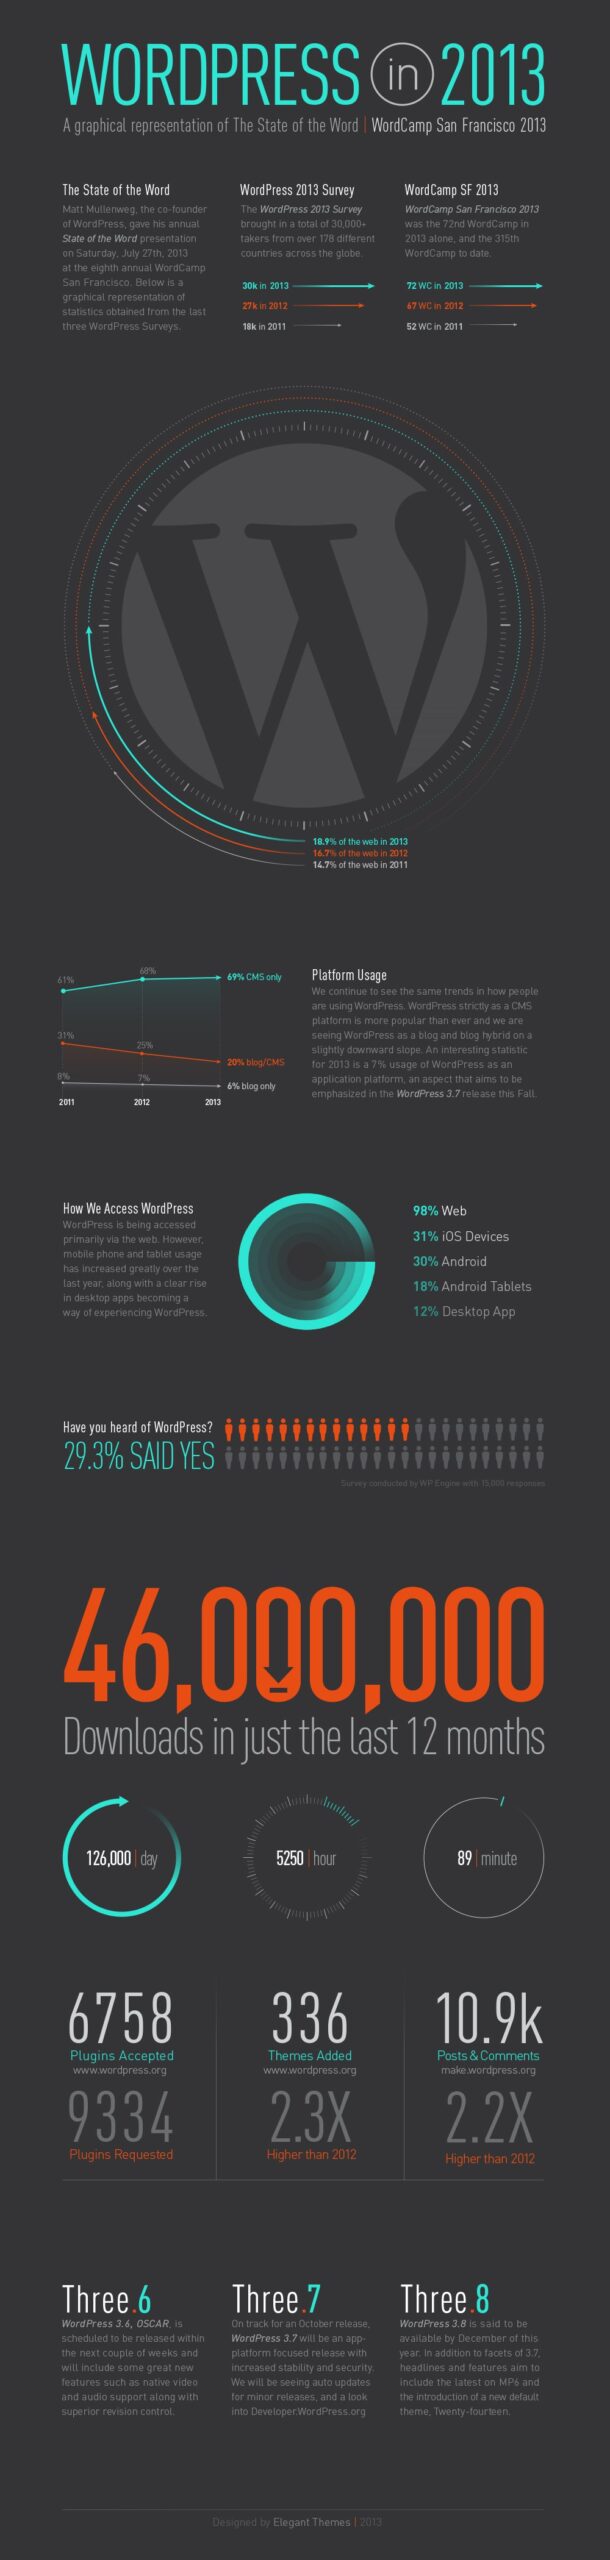 WordPress Infographic For 2013